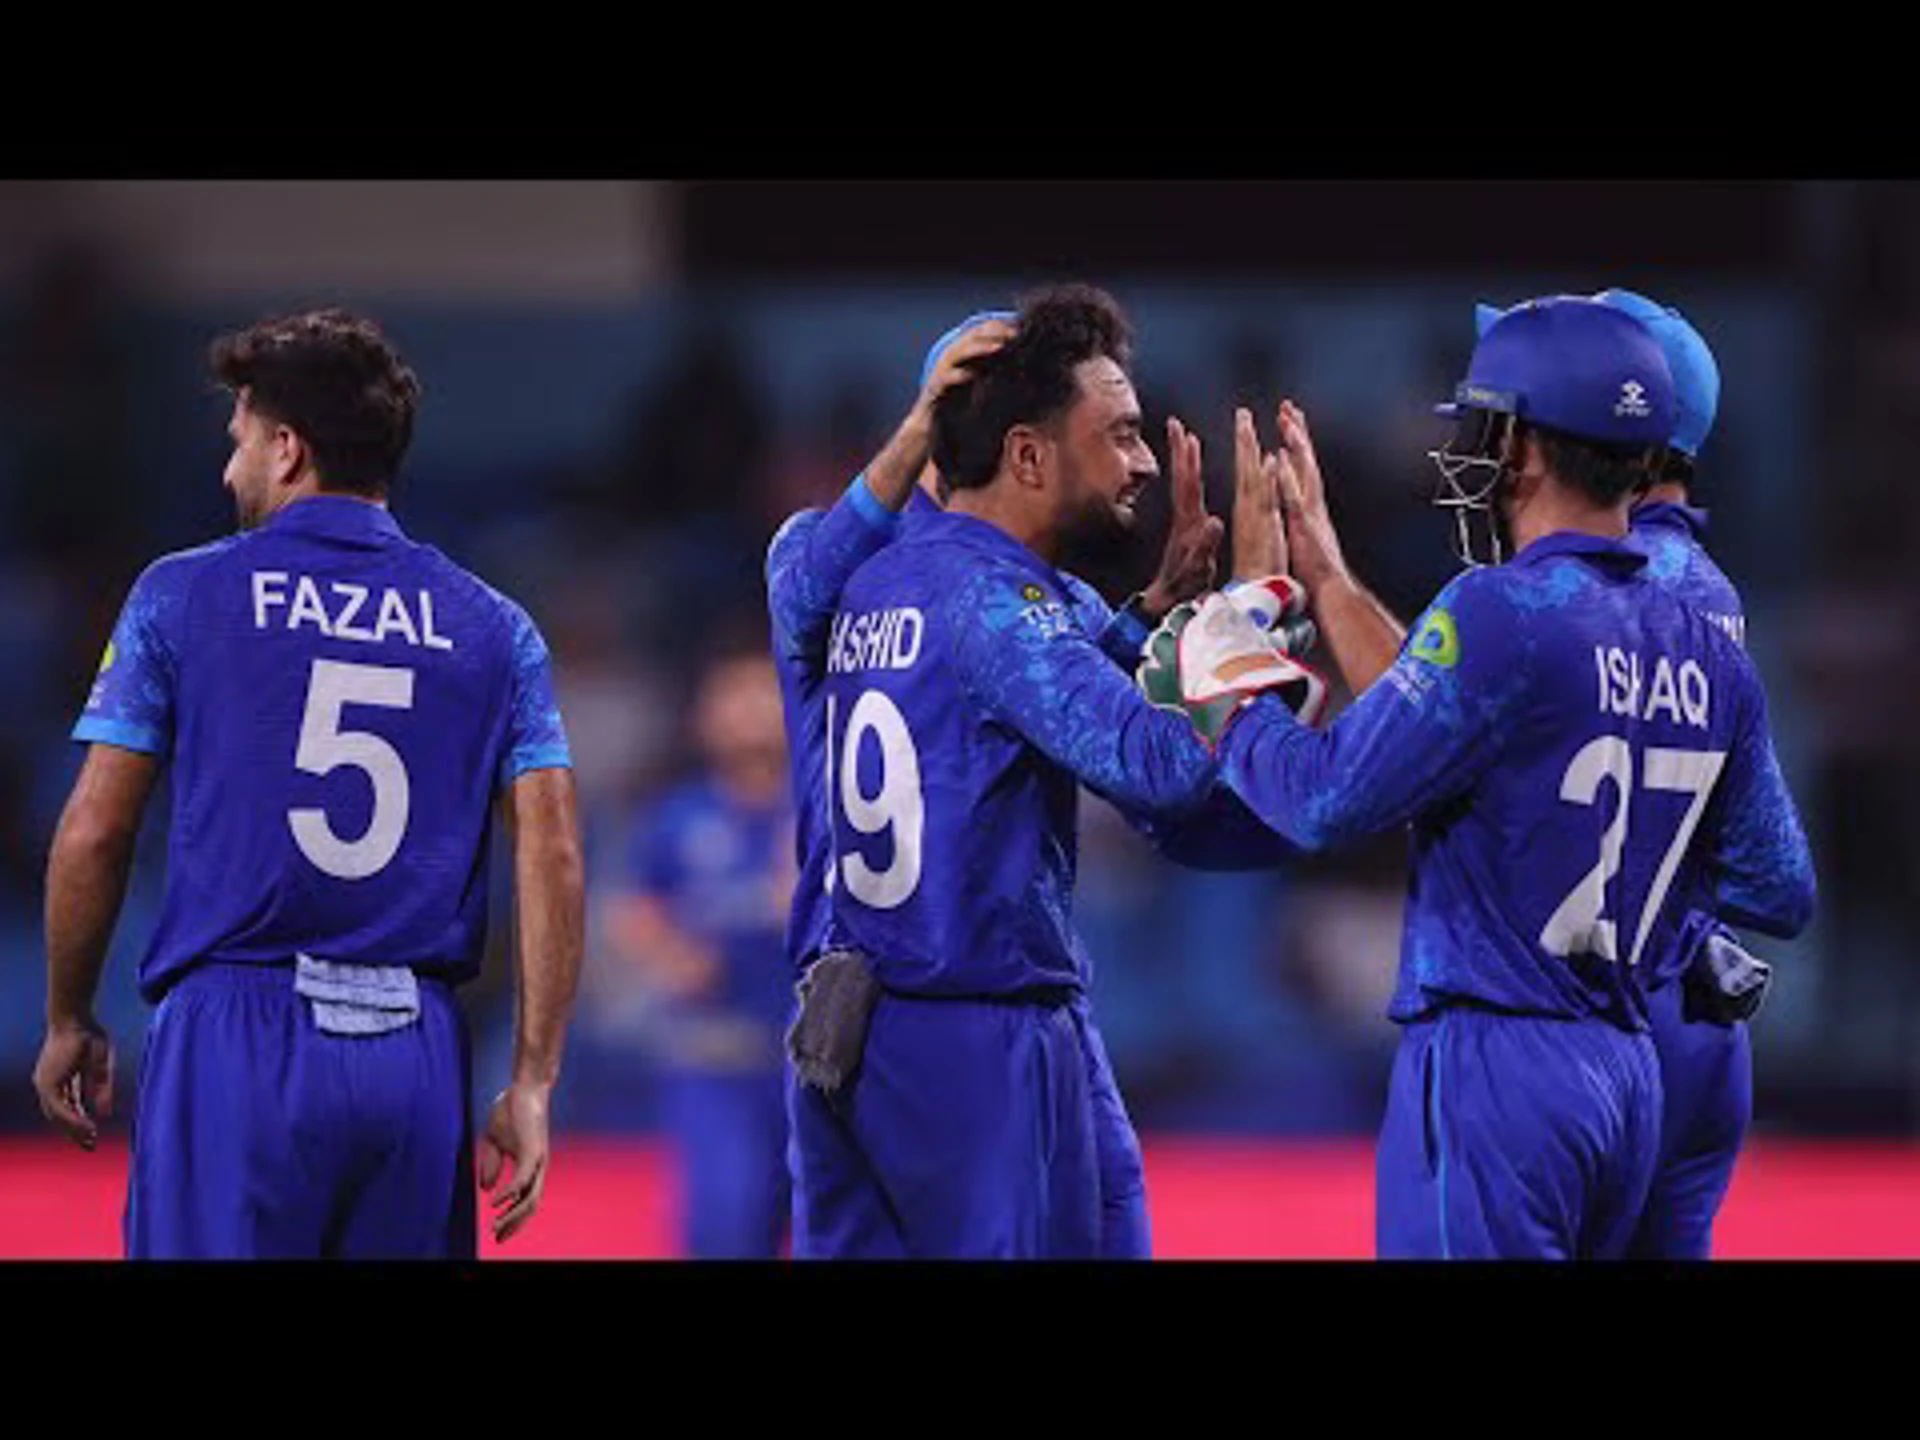 Afghanistan v Bangladesh | Match Highlights | ICC T20 World Cup Group 1